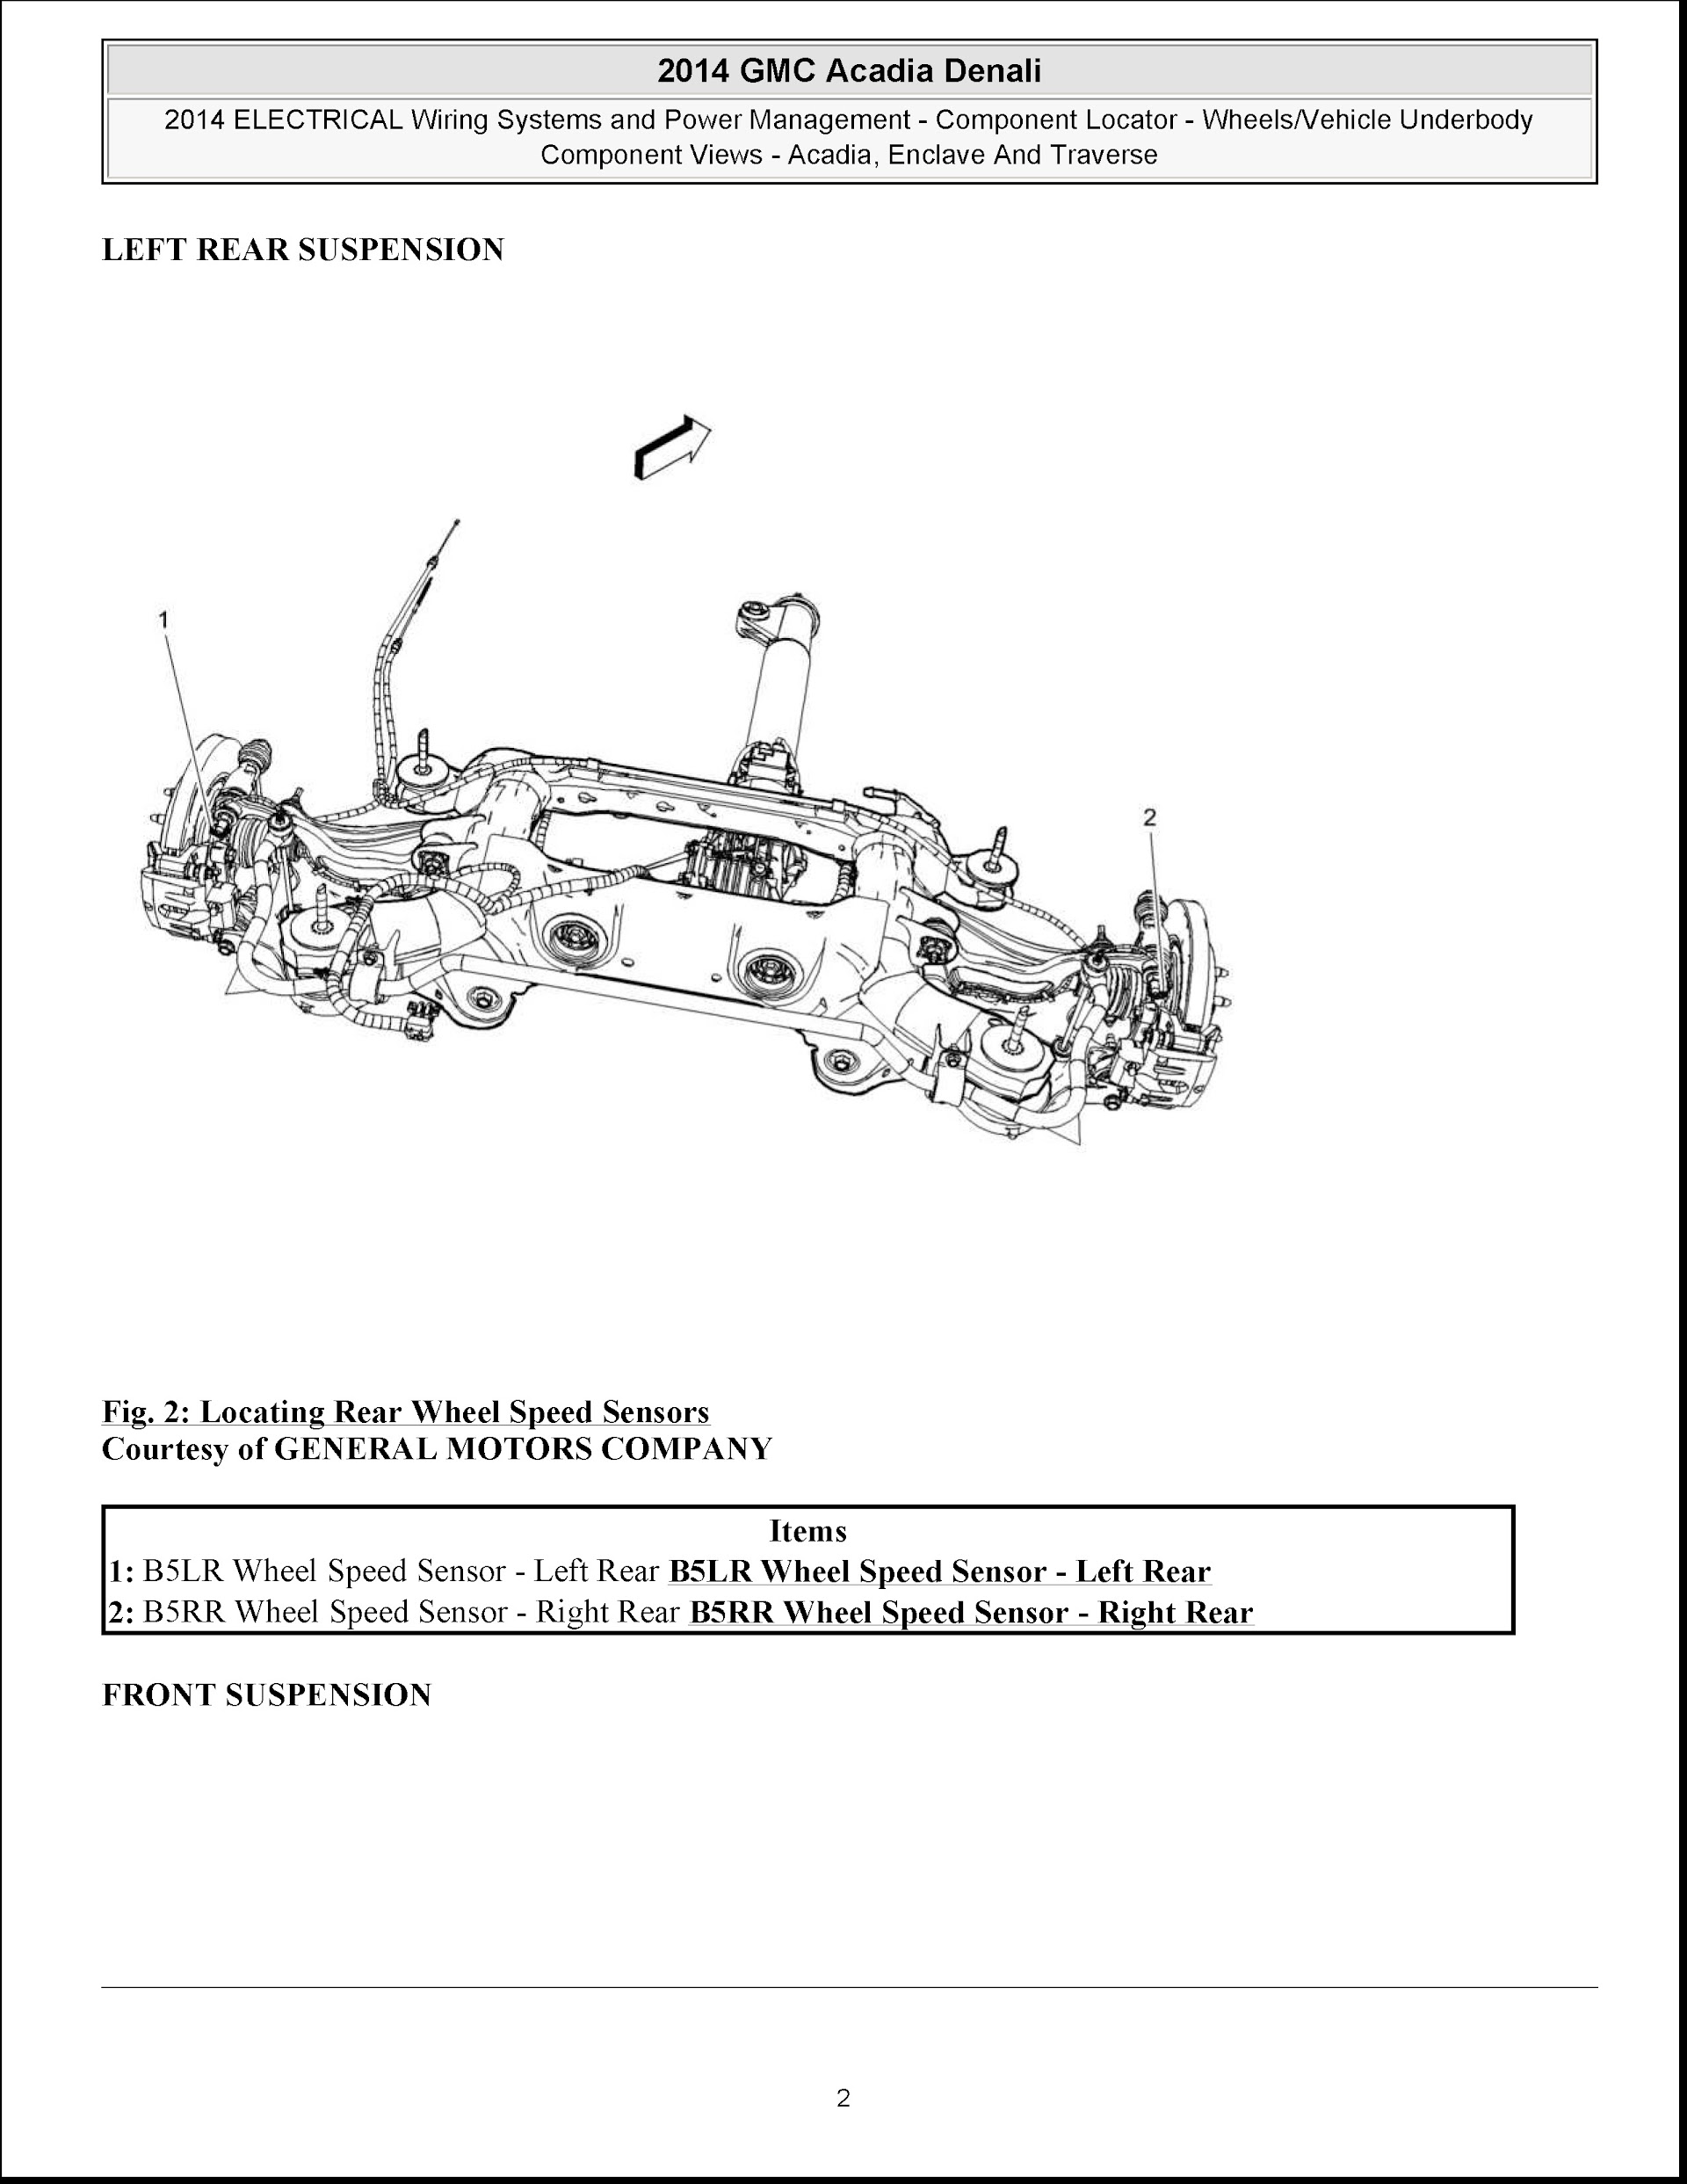 2013-2016 GMC Acadia Repair Manual (Denali, Enclave and Chevrolet Traverse)